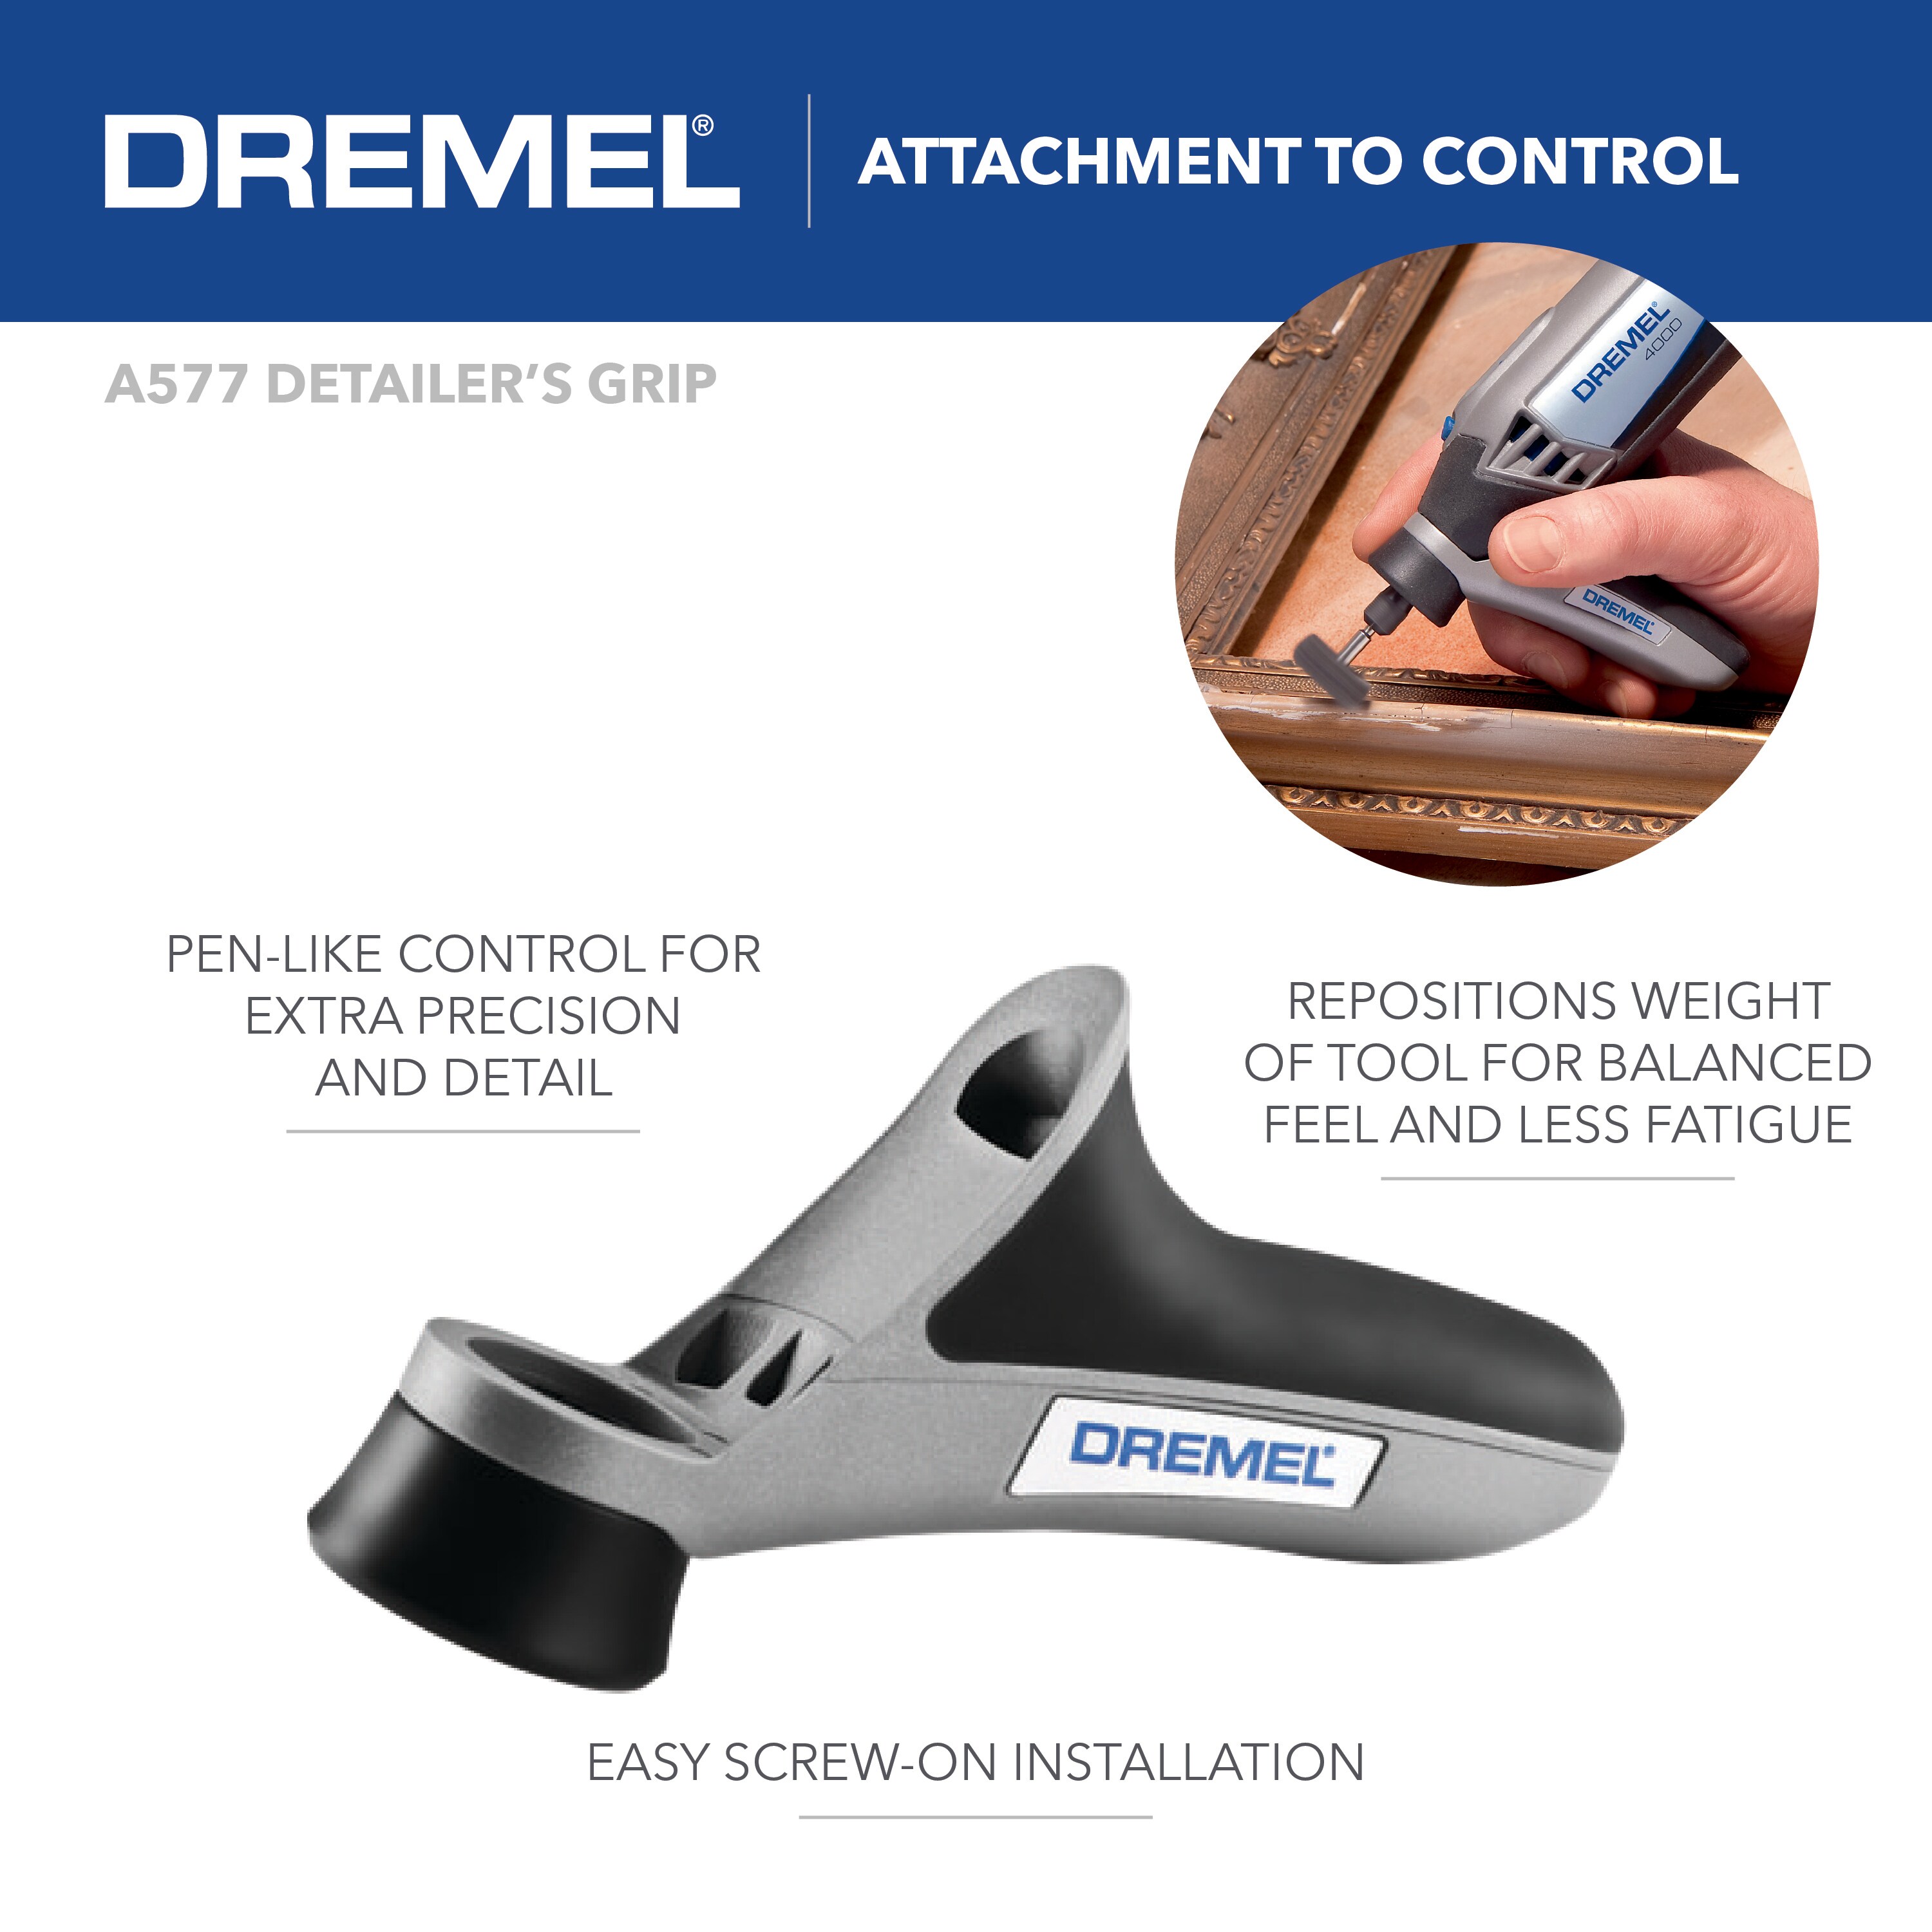 Dremel 4000-4/34 Variable Speed Rotary Tool Kit - Engraver, Polisher, (Gray)